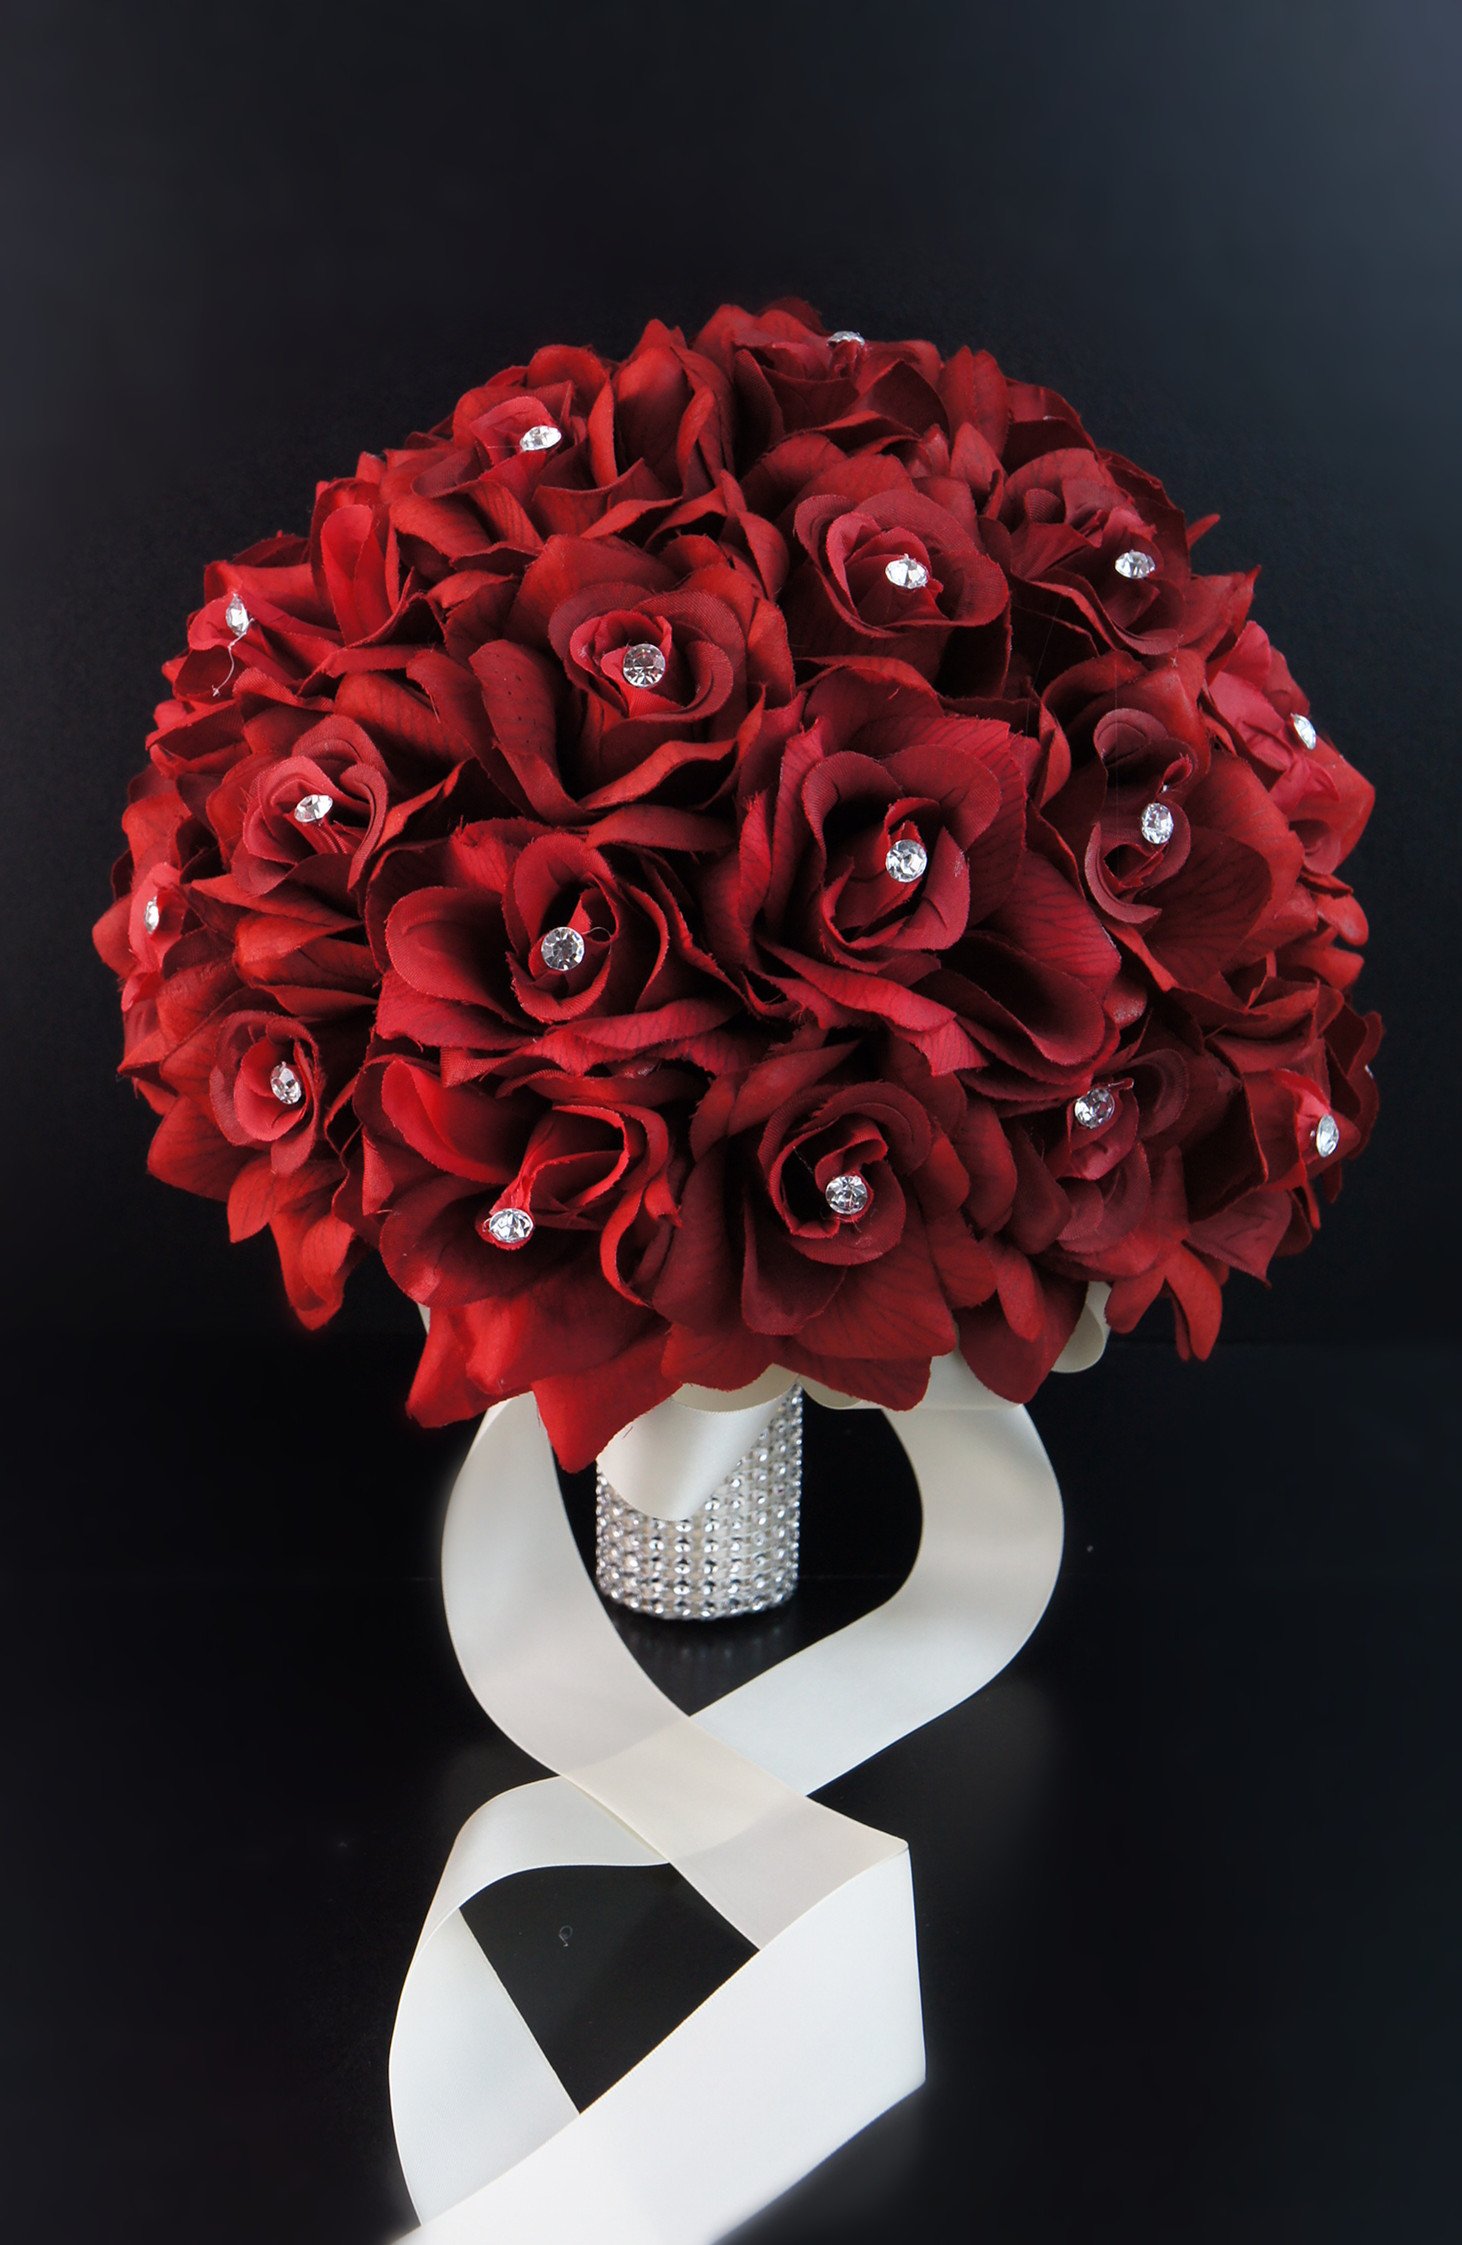 18pc Wedding Bridal Party Silk Flower - Apple Red 3 Dozens Rose Bridal Bouquet - Boutonniere,corsage,petals